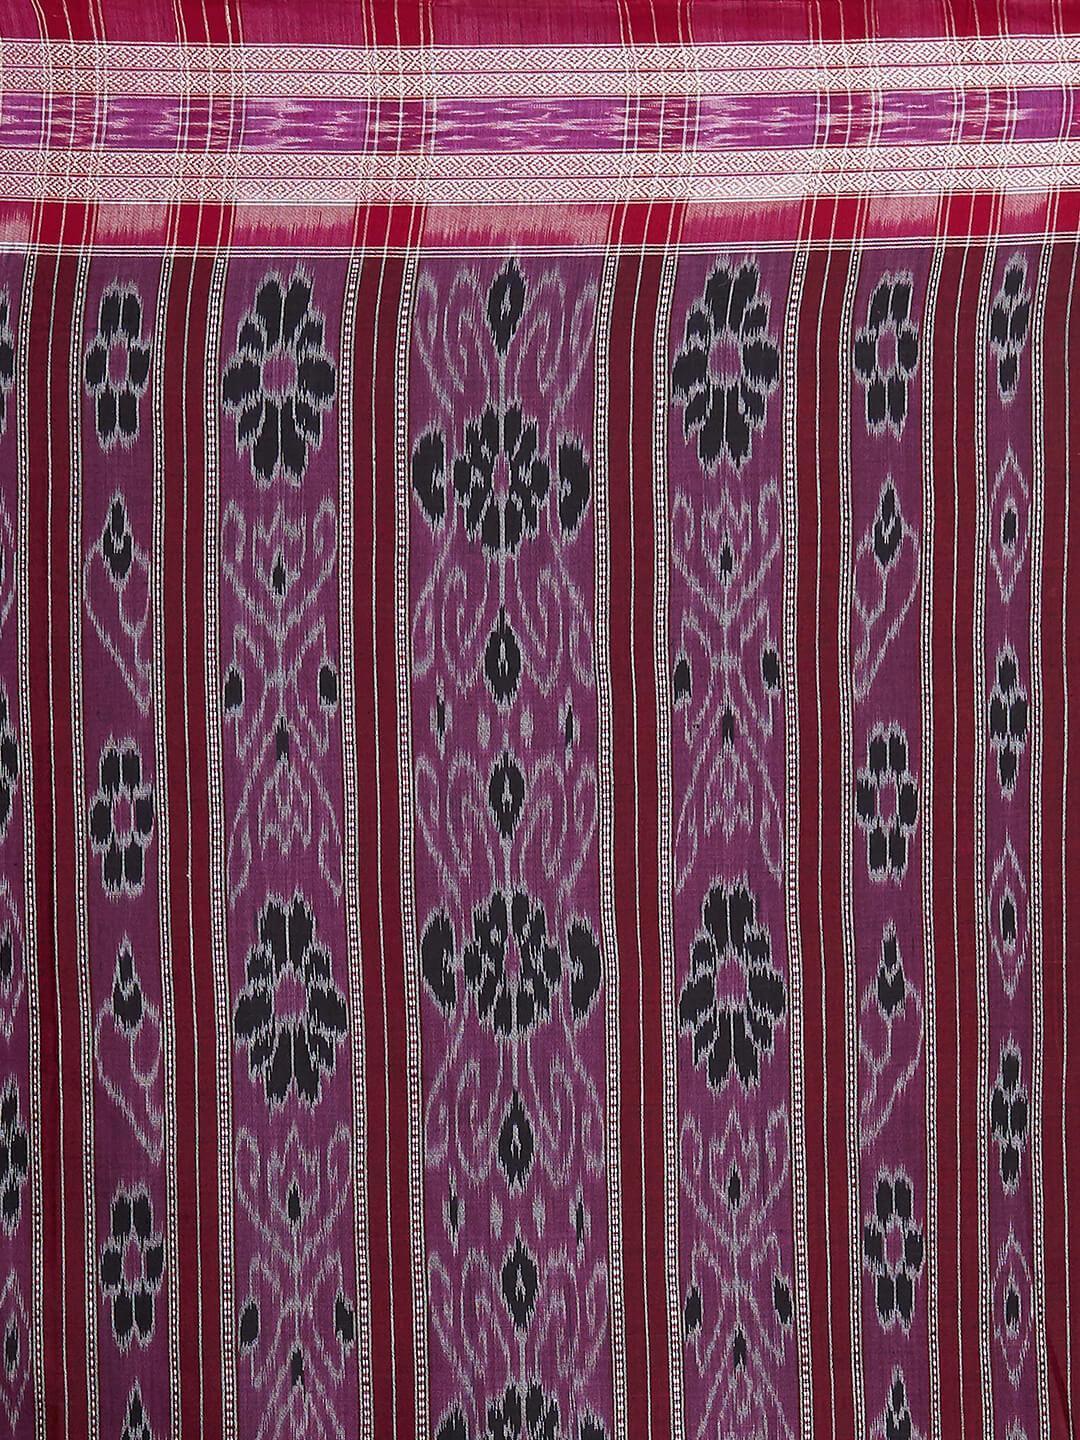 CraftsCollection.in - Black and Pink Sambalpuri Bandha Cotton Saree